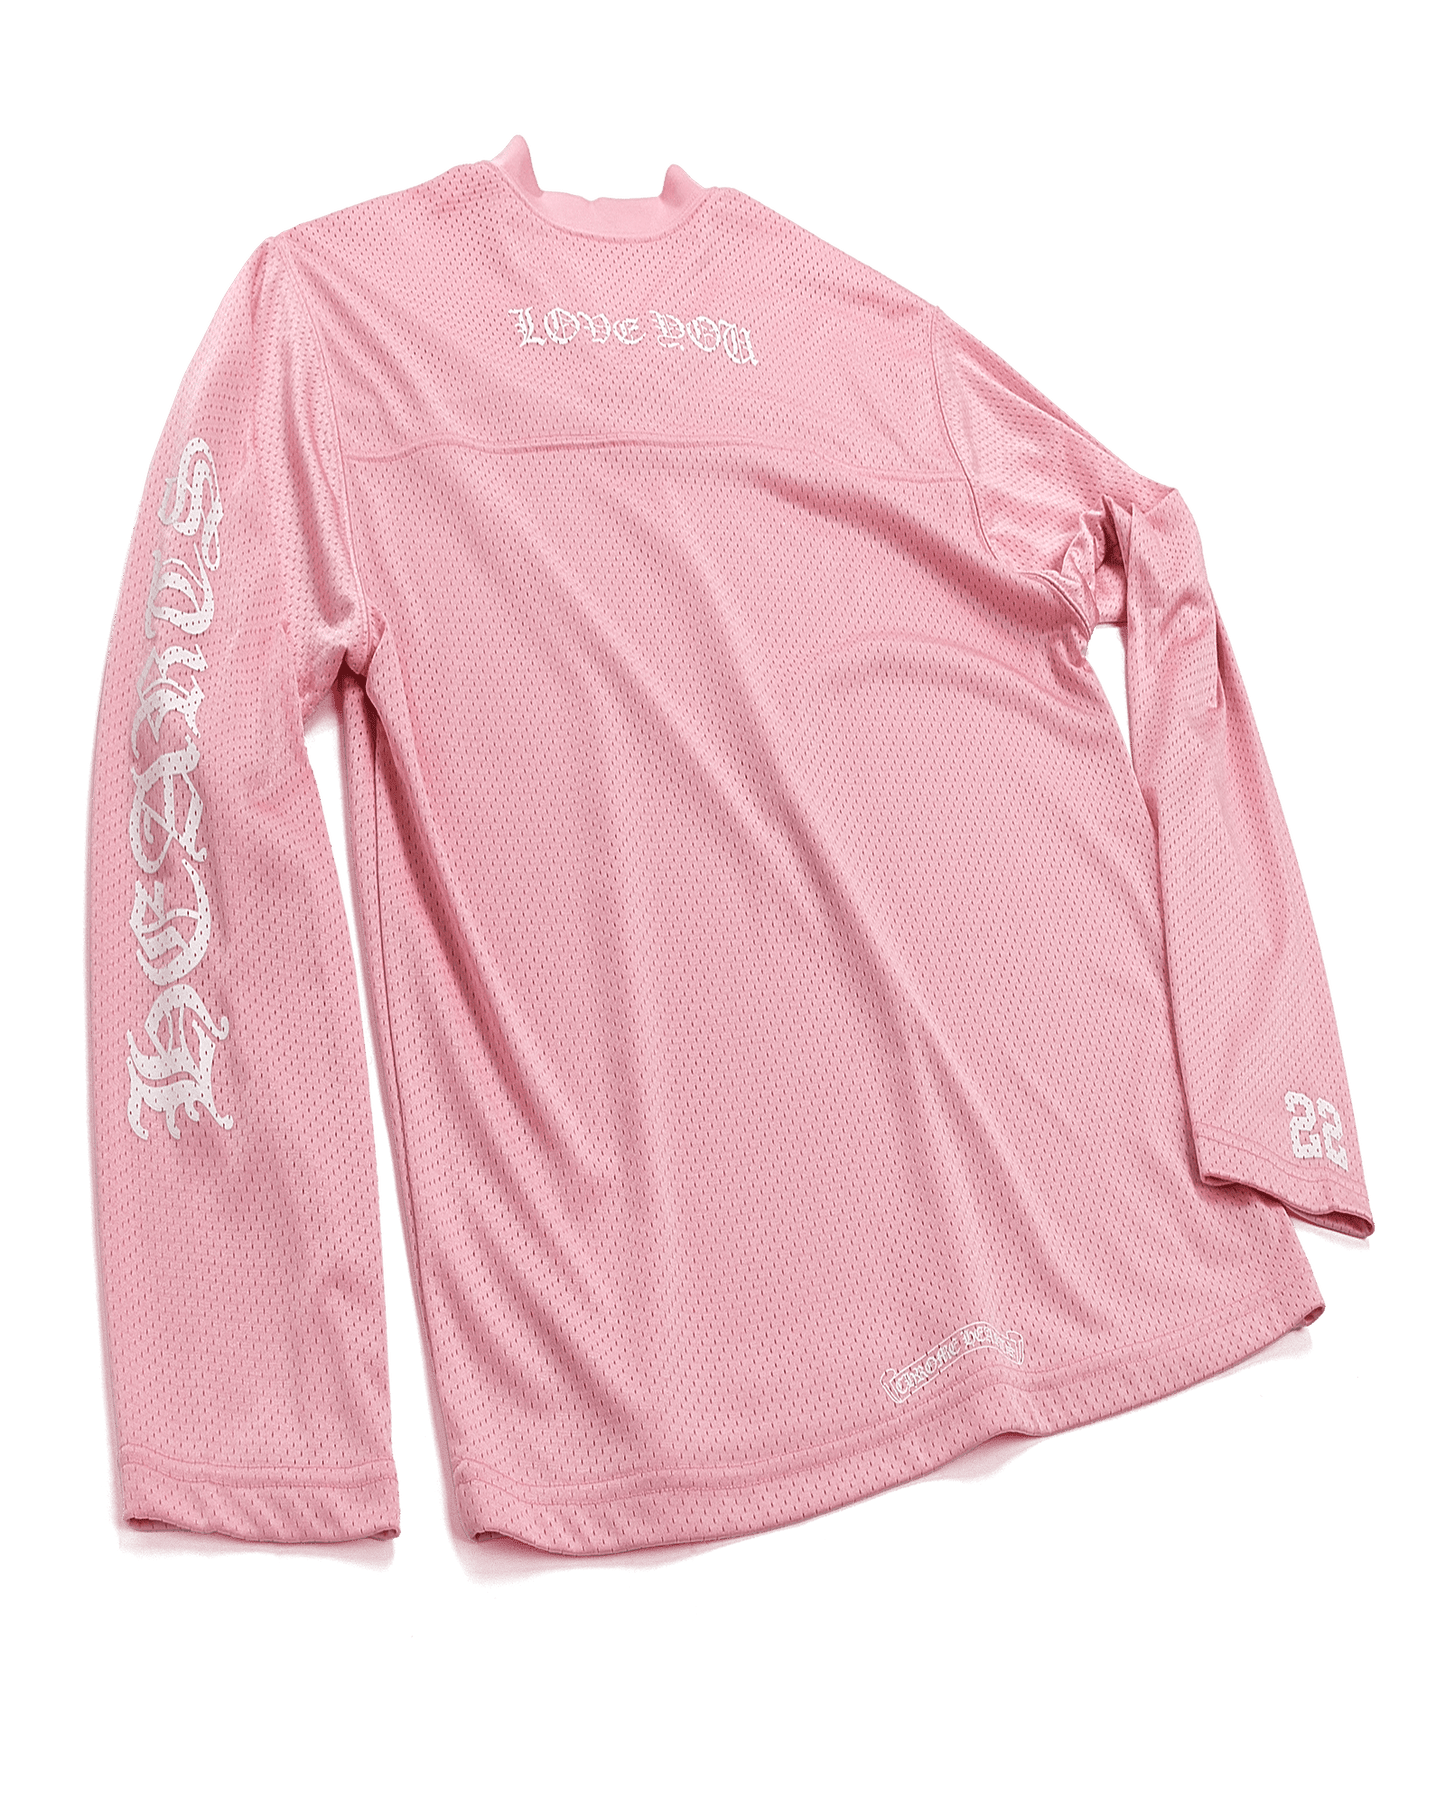 Chrome Hearts Love You Mesh Warm Up Jersey Pink - Paroissesaintefoy Sneakers Sale Online